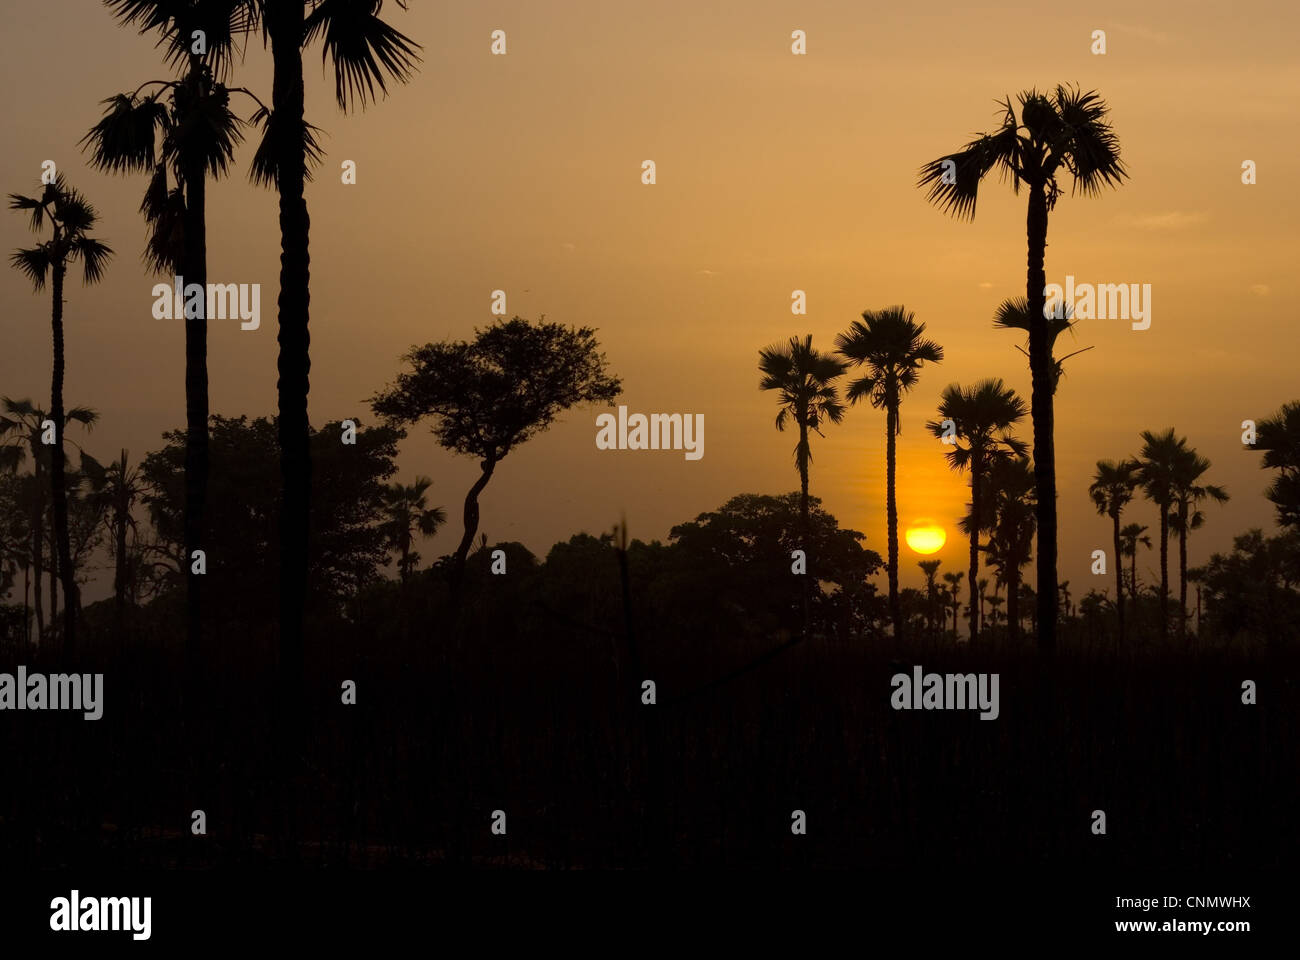 Palm trees silhouetted at sunset, Banfora, Comoe Province, Burkina Faso Stock Photo